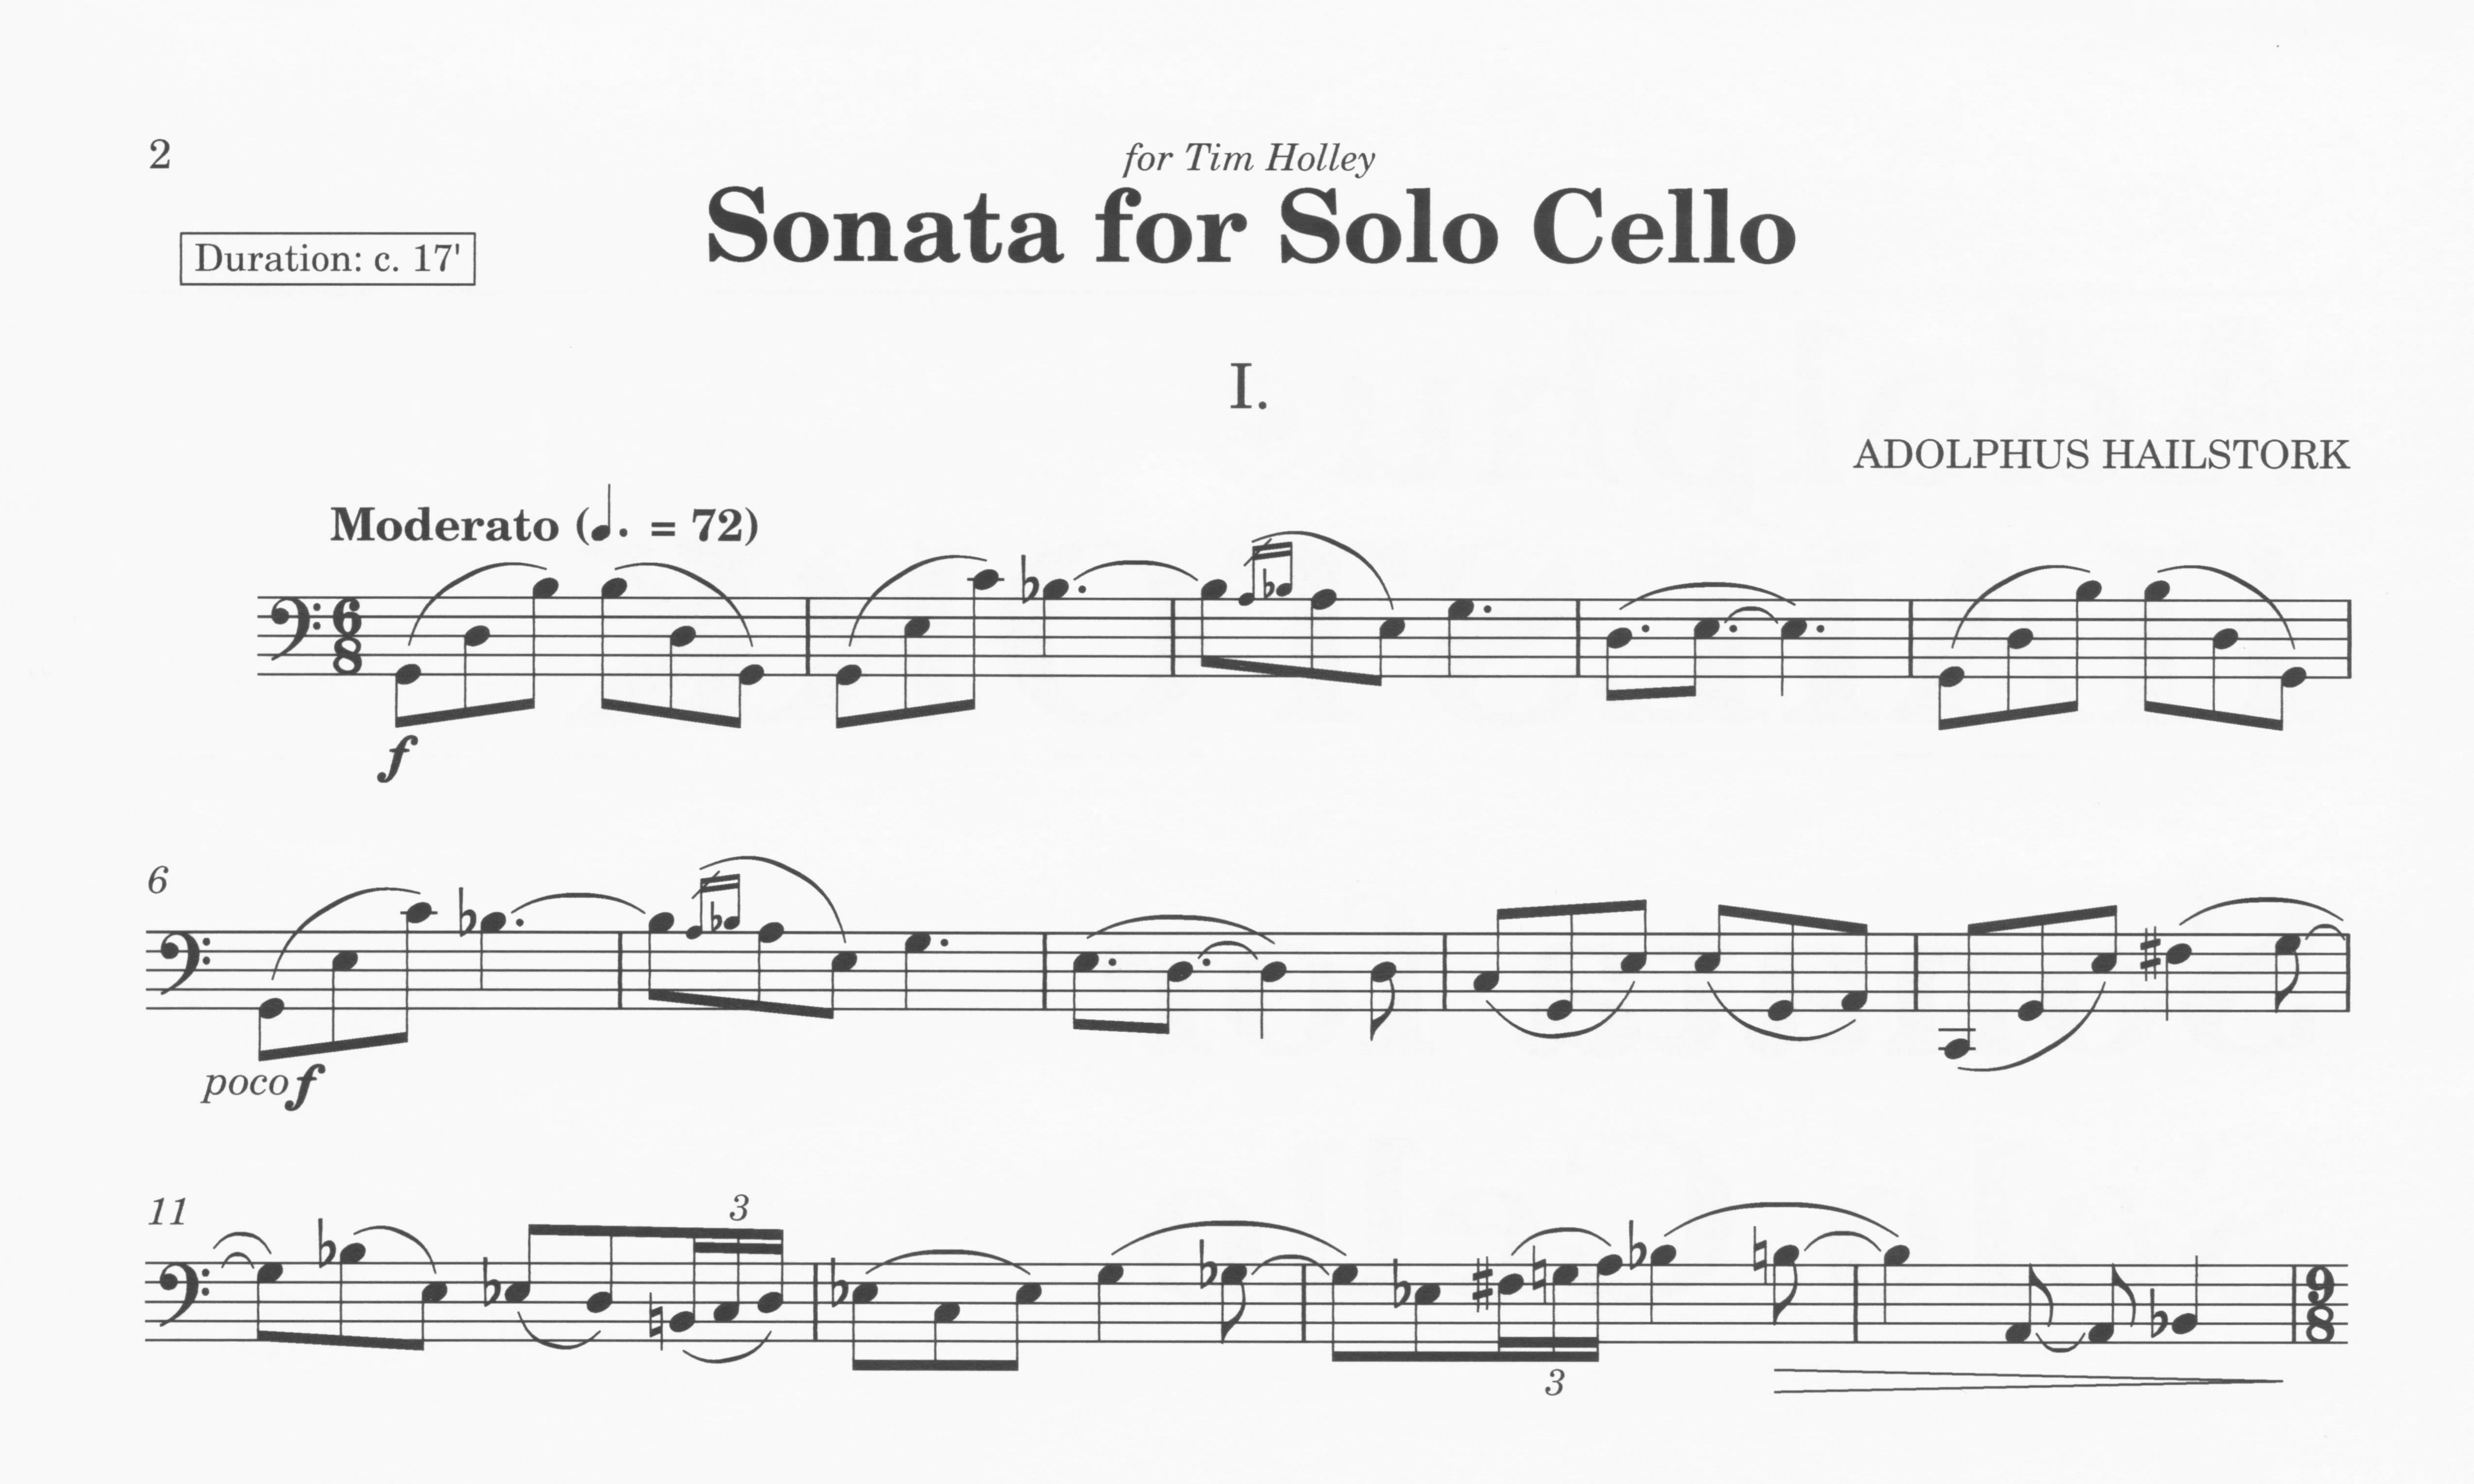 Sonata for Solo Cello - Adolphus Hailstork